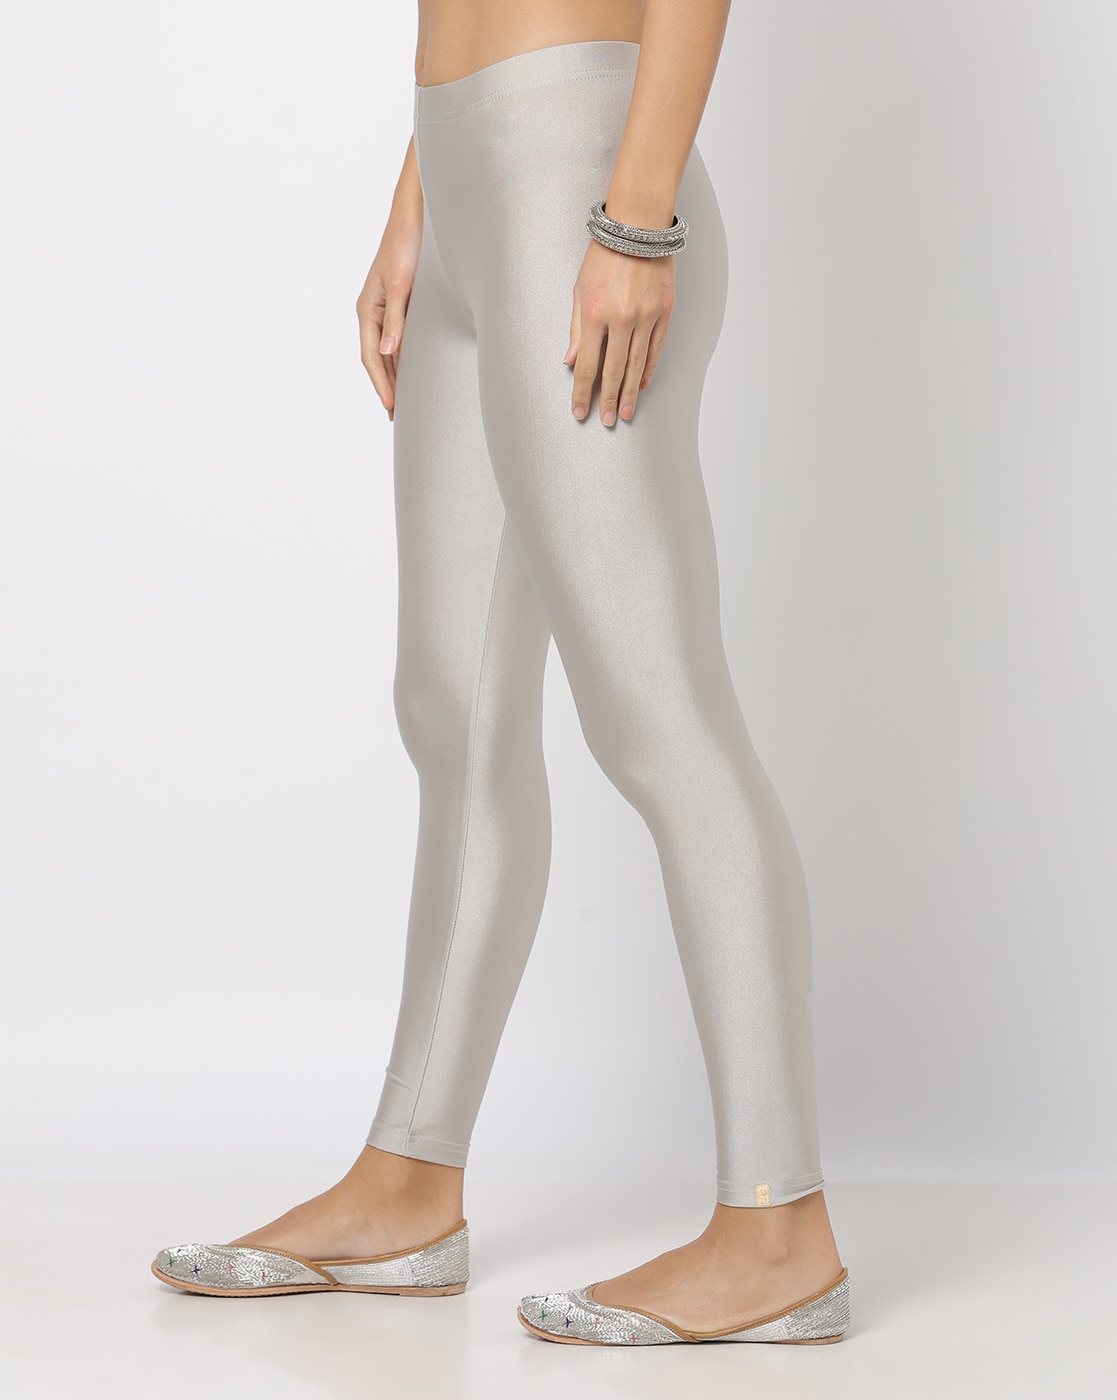 Churidar Plain Ladies Silver Shimmer Leggings, Size: XL-XXL at Rs